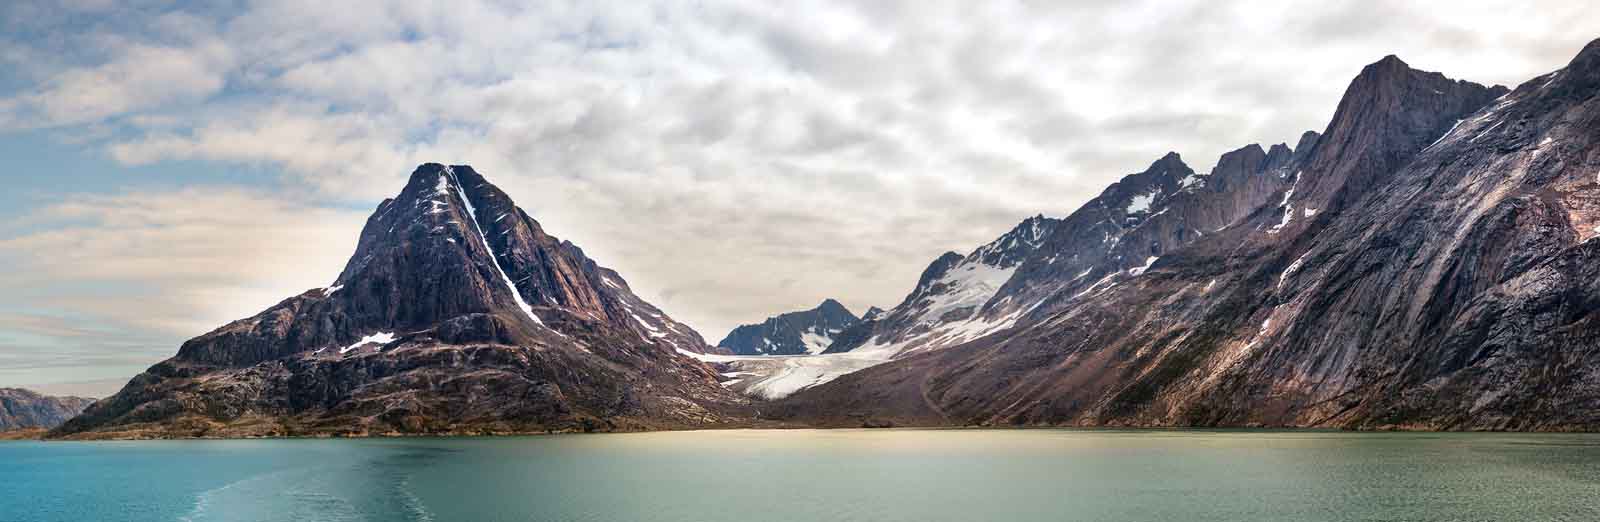 Skjoldungen  | Greenland |  Antarctica | South America Travel